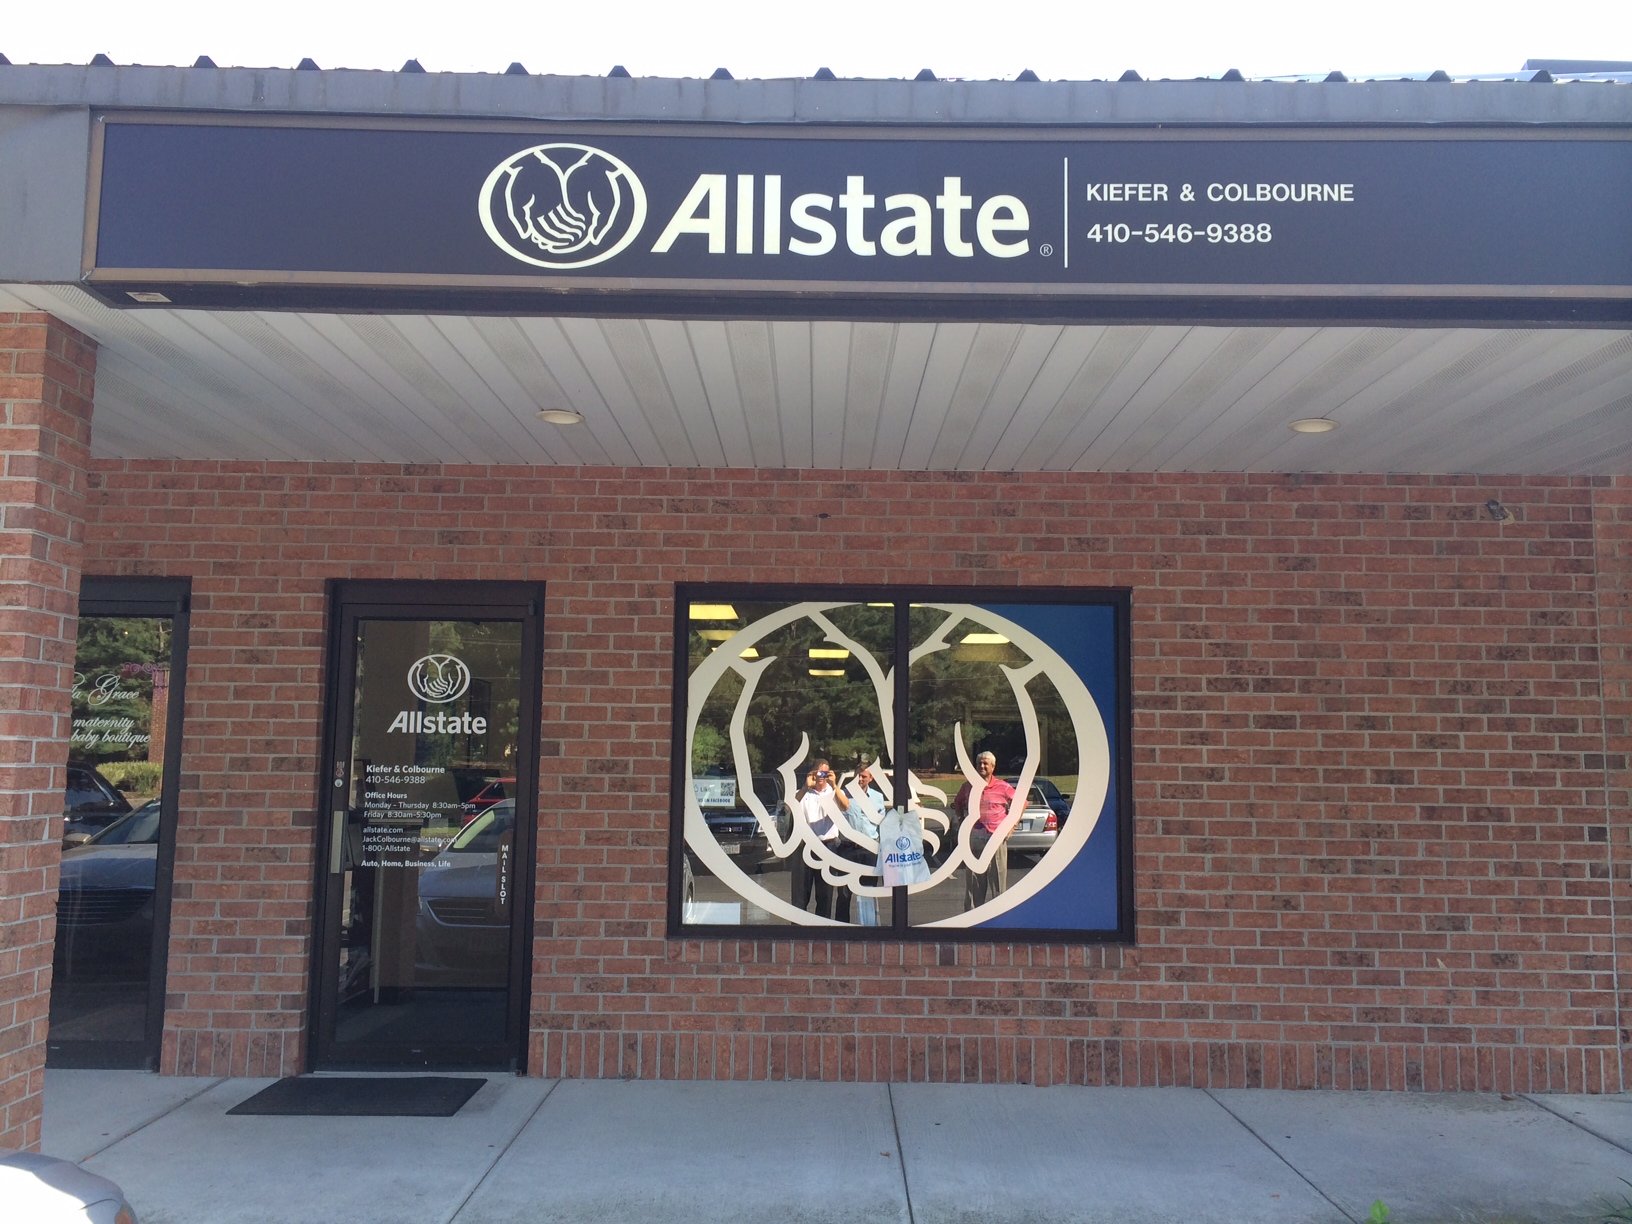 Allstate | Car Insurance in Salisbury, MD - Jack Colbourne